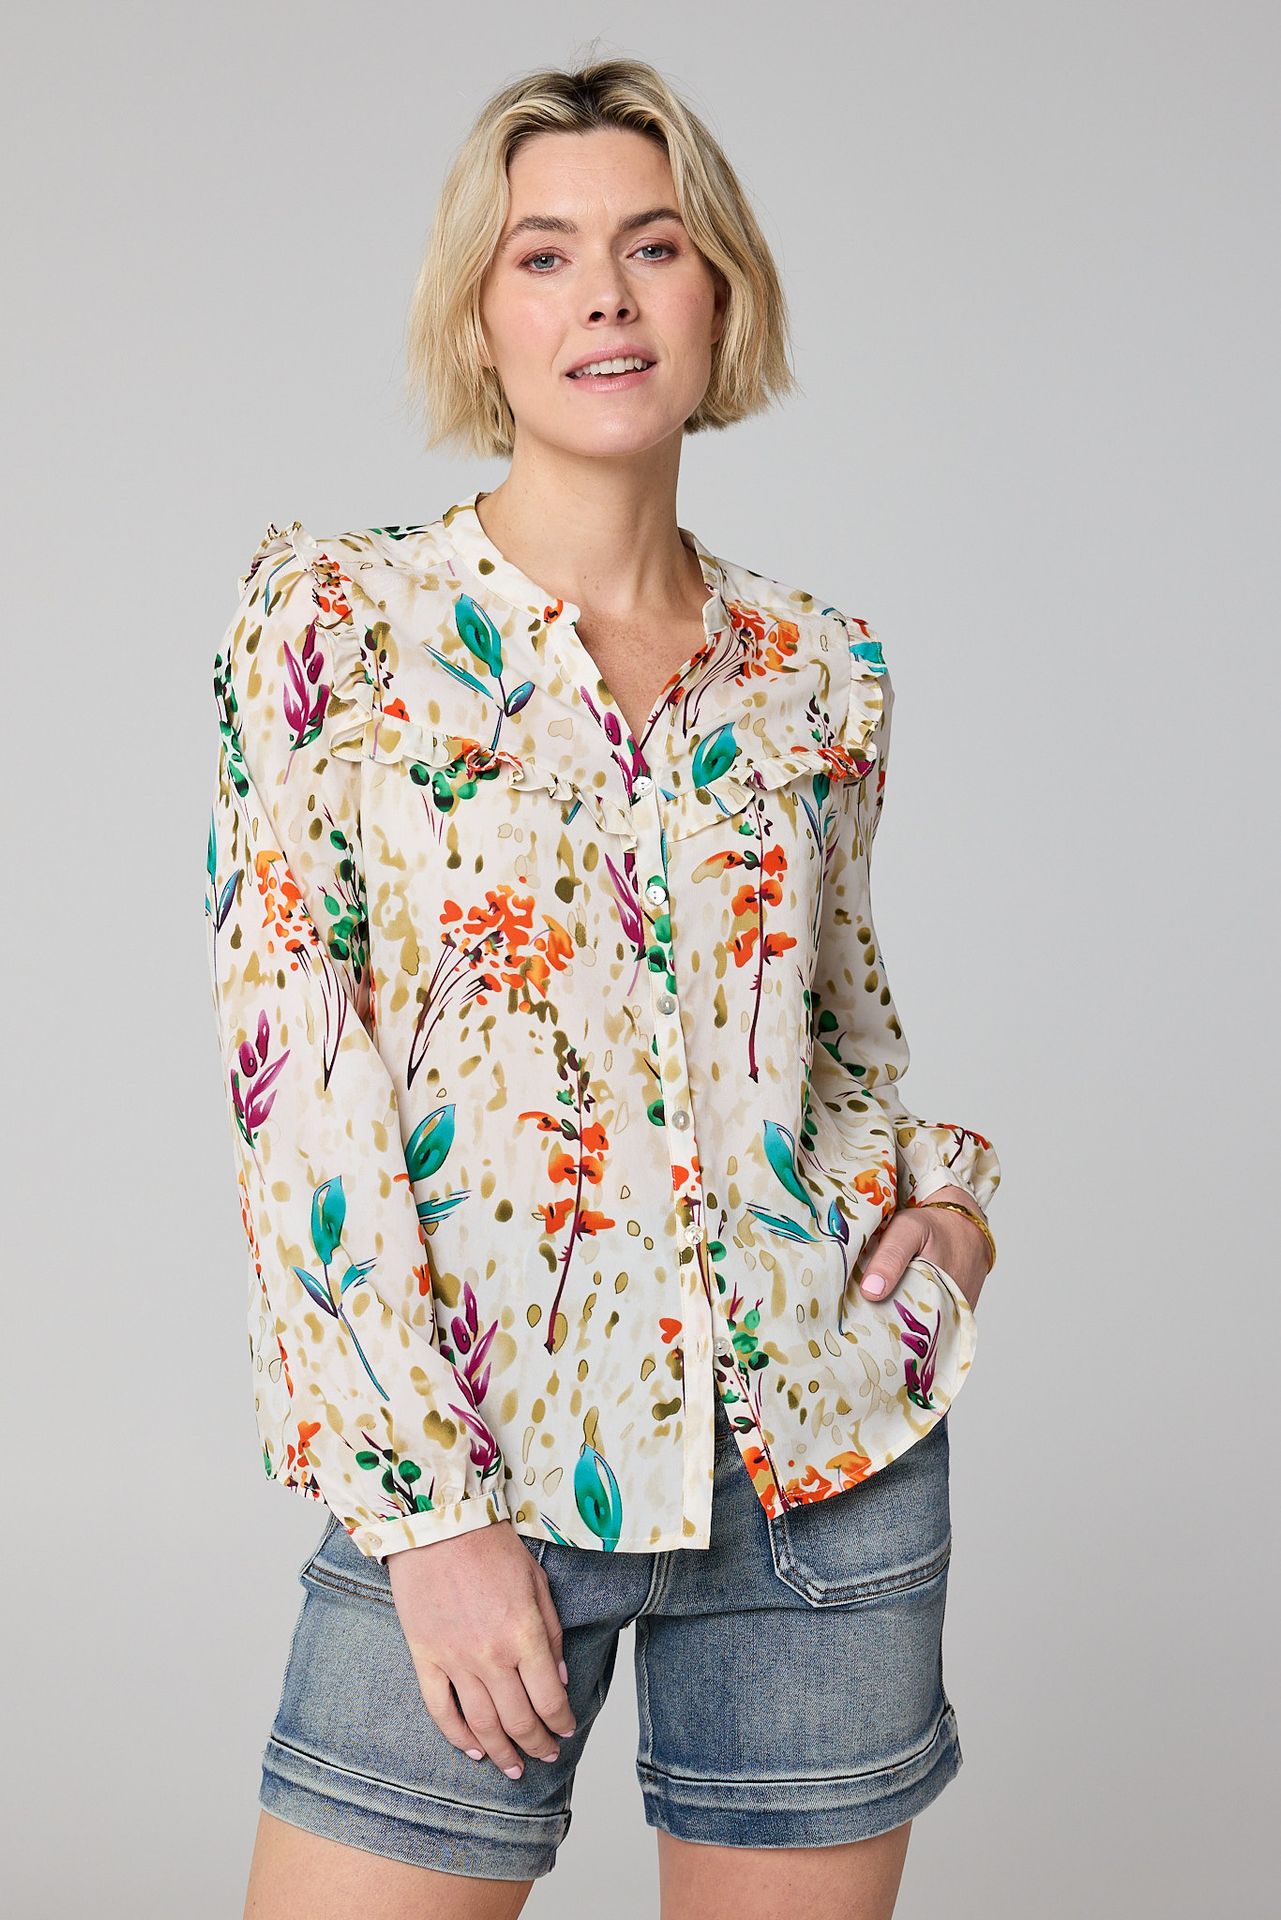  Meerkleurige blouse multicolor 213857-002-36